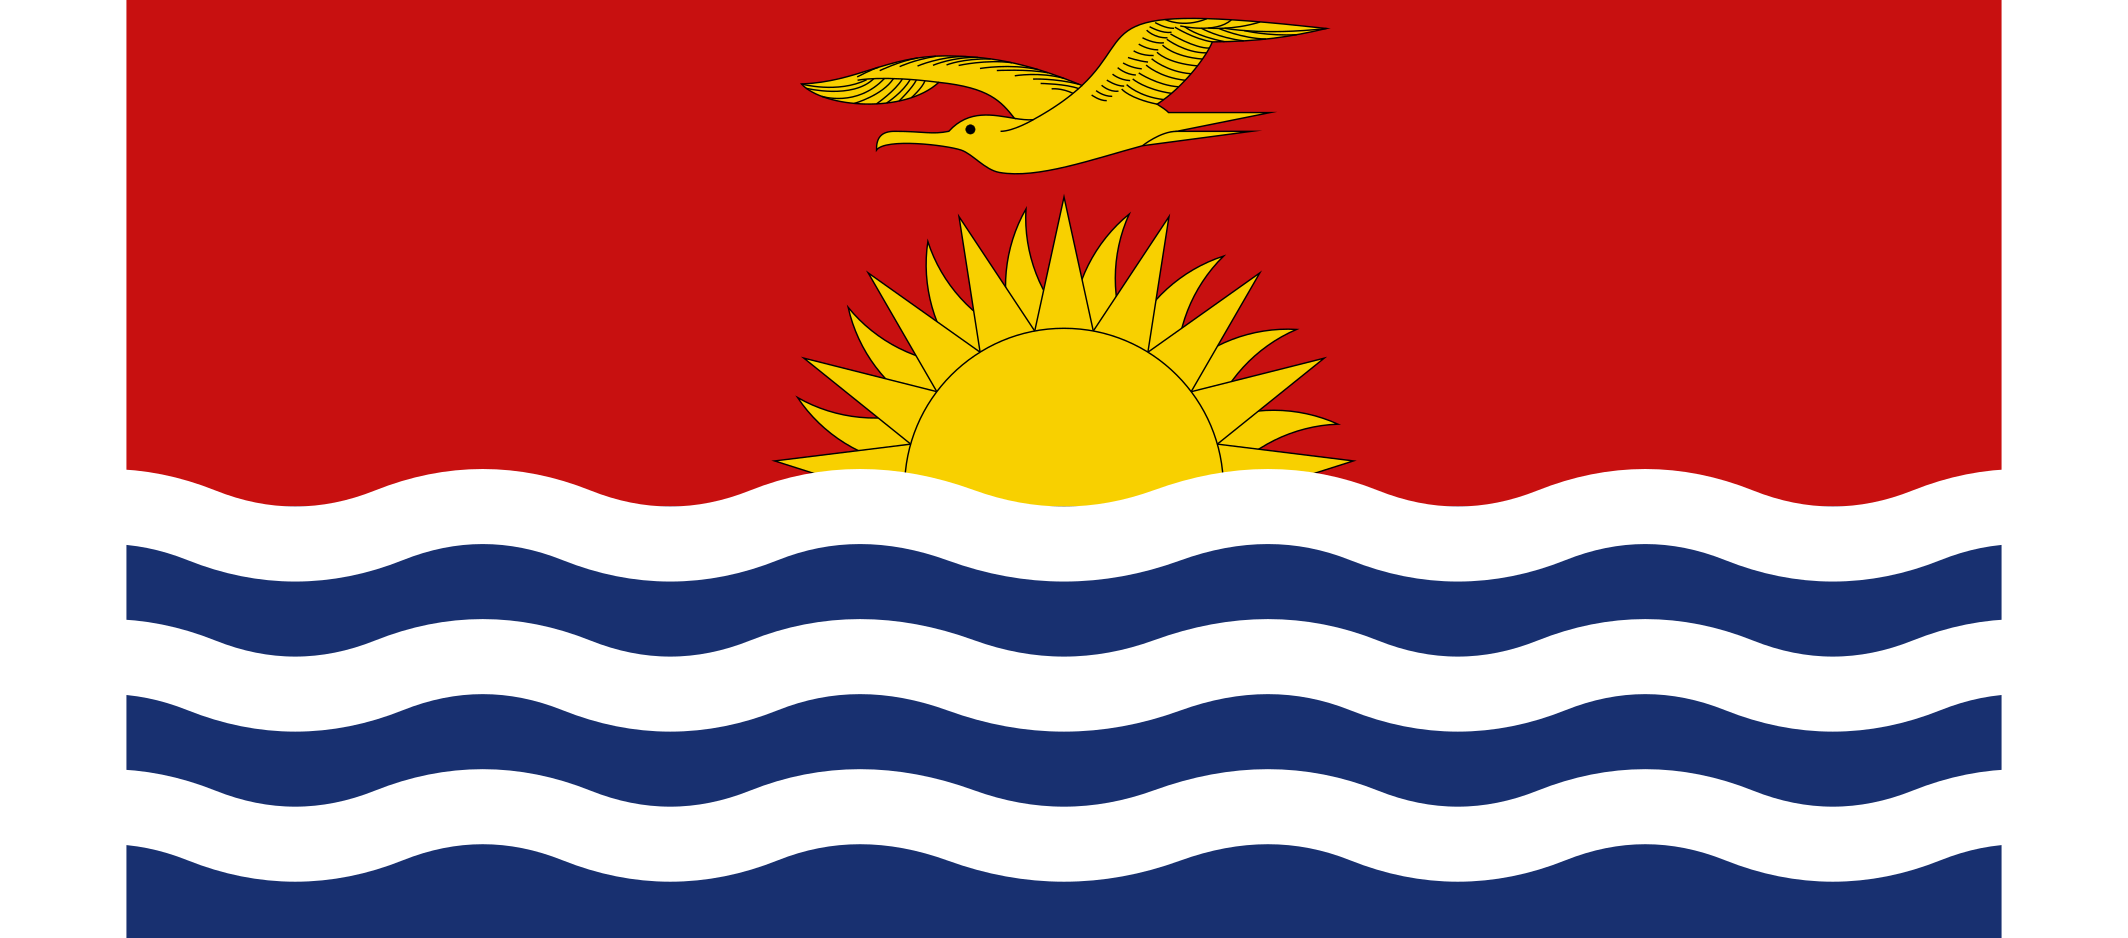 Kiribati Flag Image - Free Download